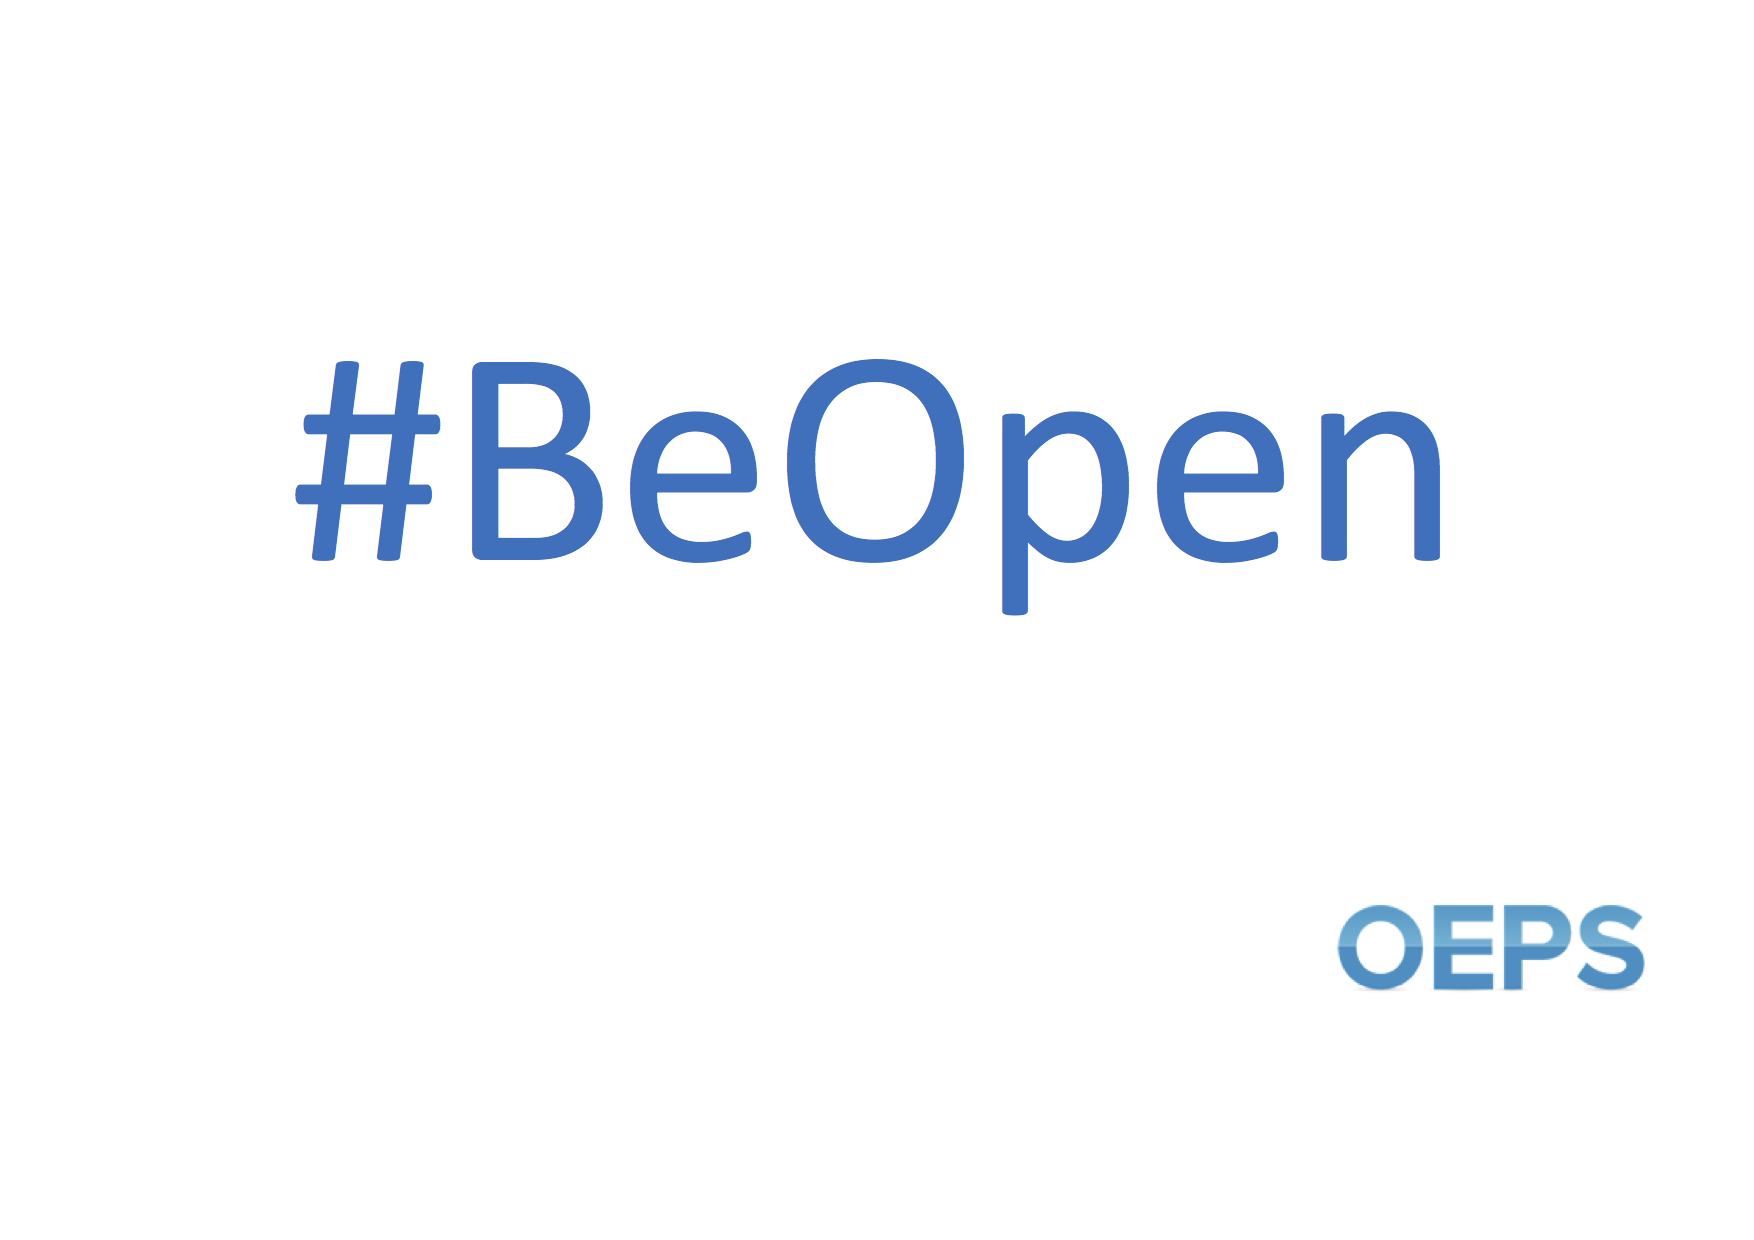 #BeOpen OEPS image